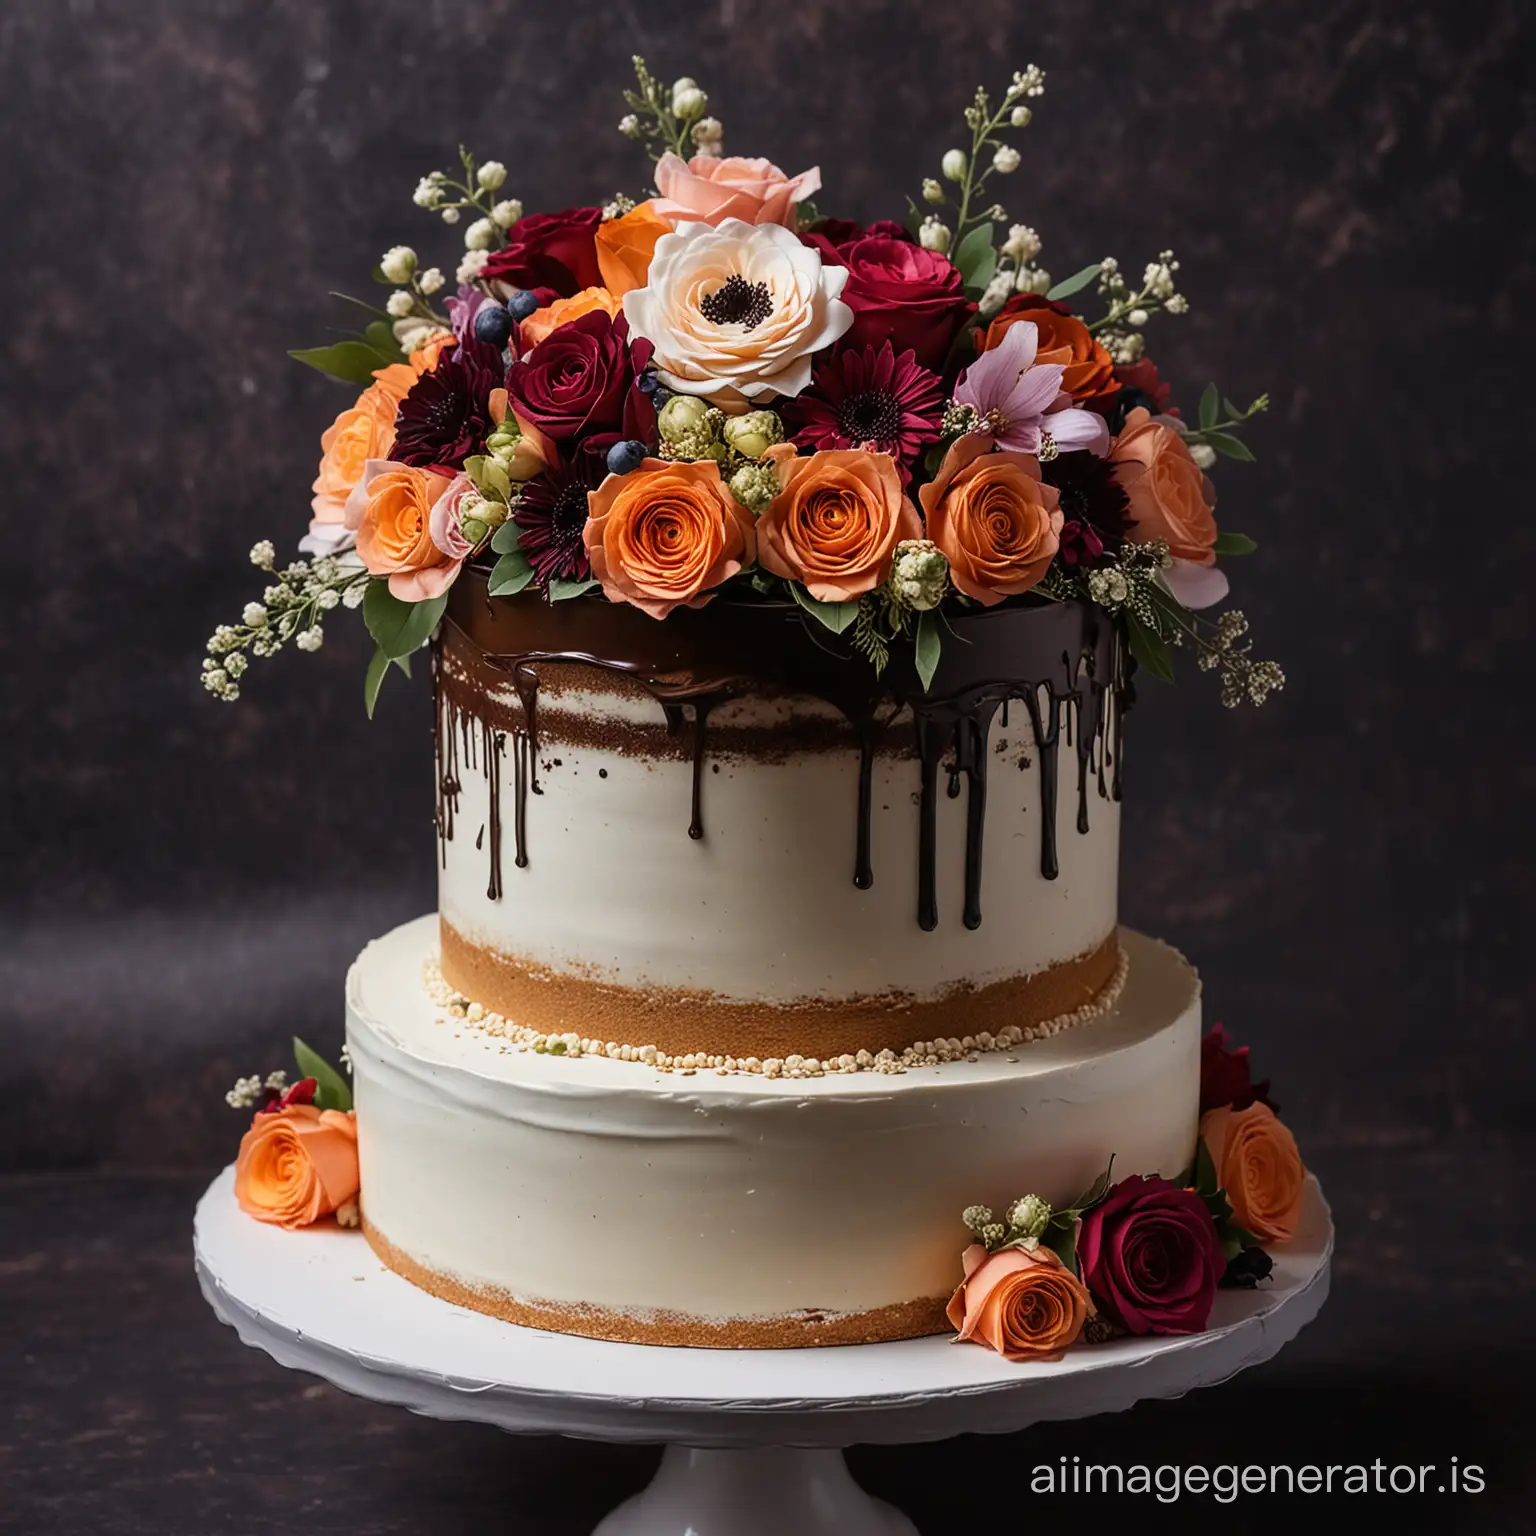 Elegant-Wedding-Cake-with-Floral-Decorations-on-Dark-Background